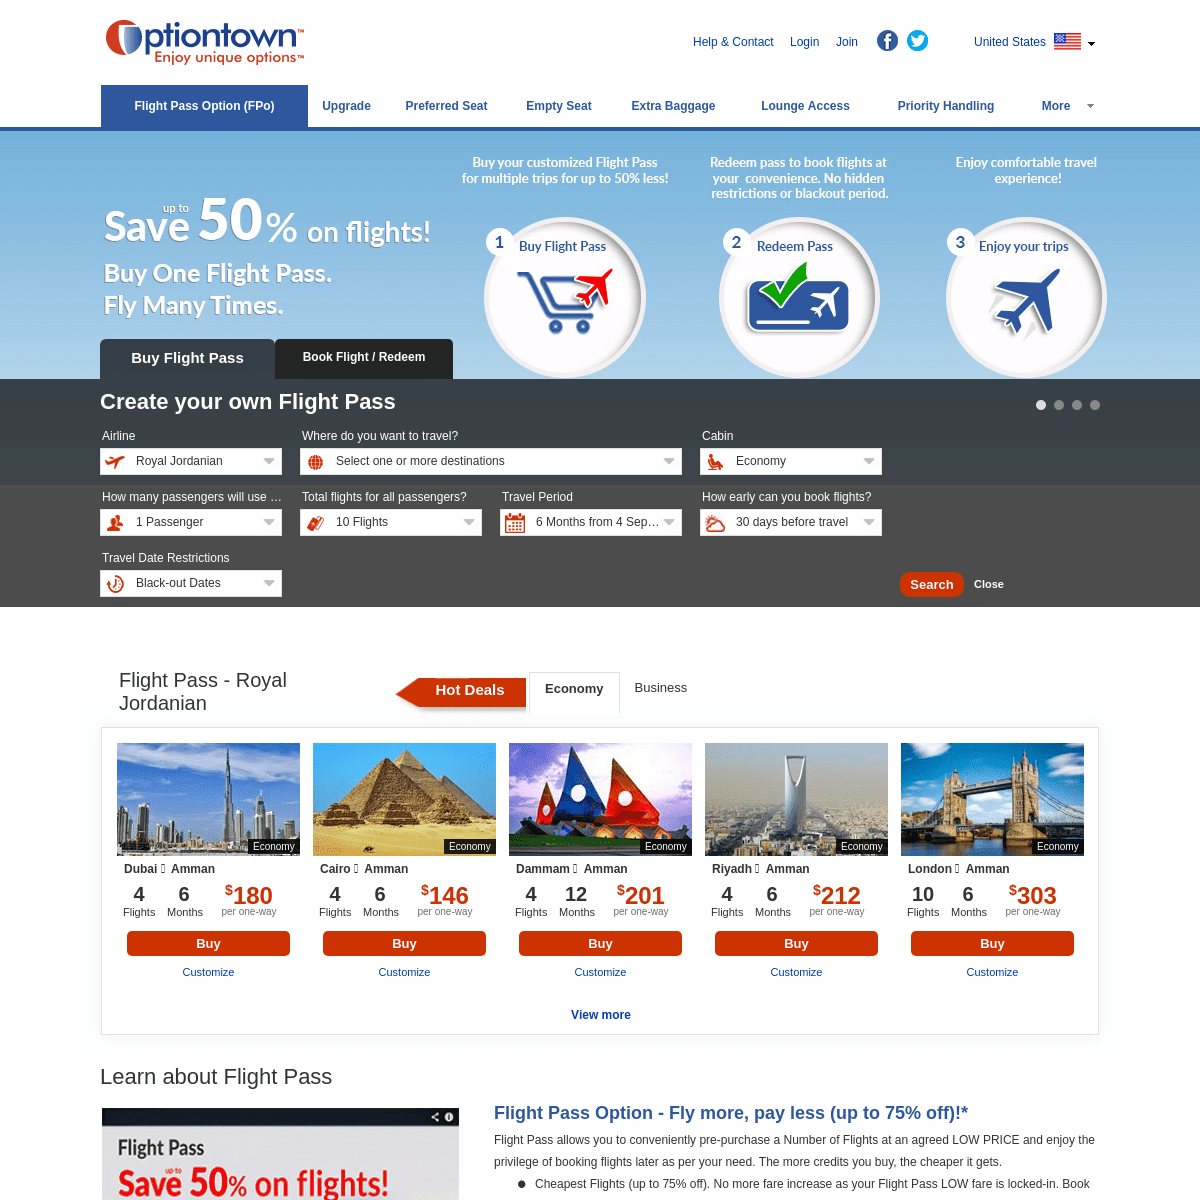 Flights at 50% discount, cheap fares, great deals. Buy flights in bulk at less than HALF price!